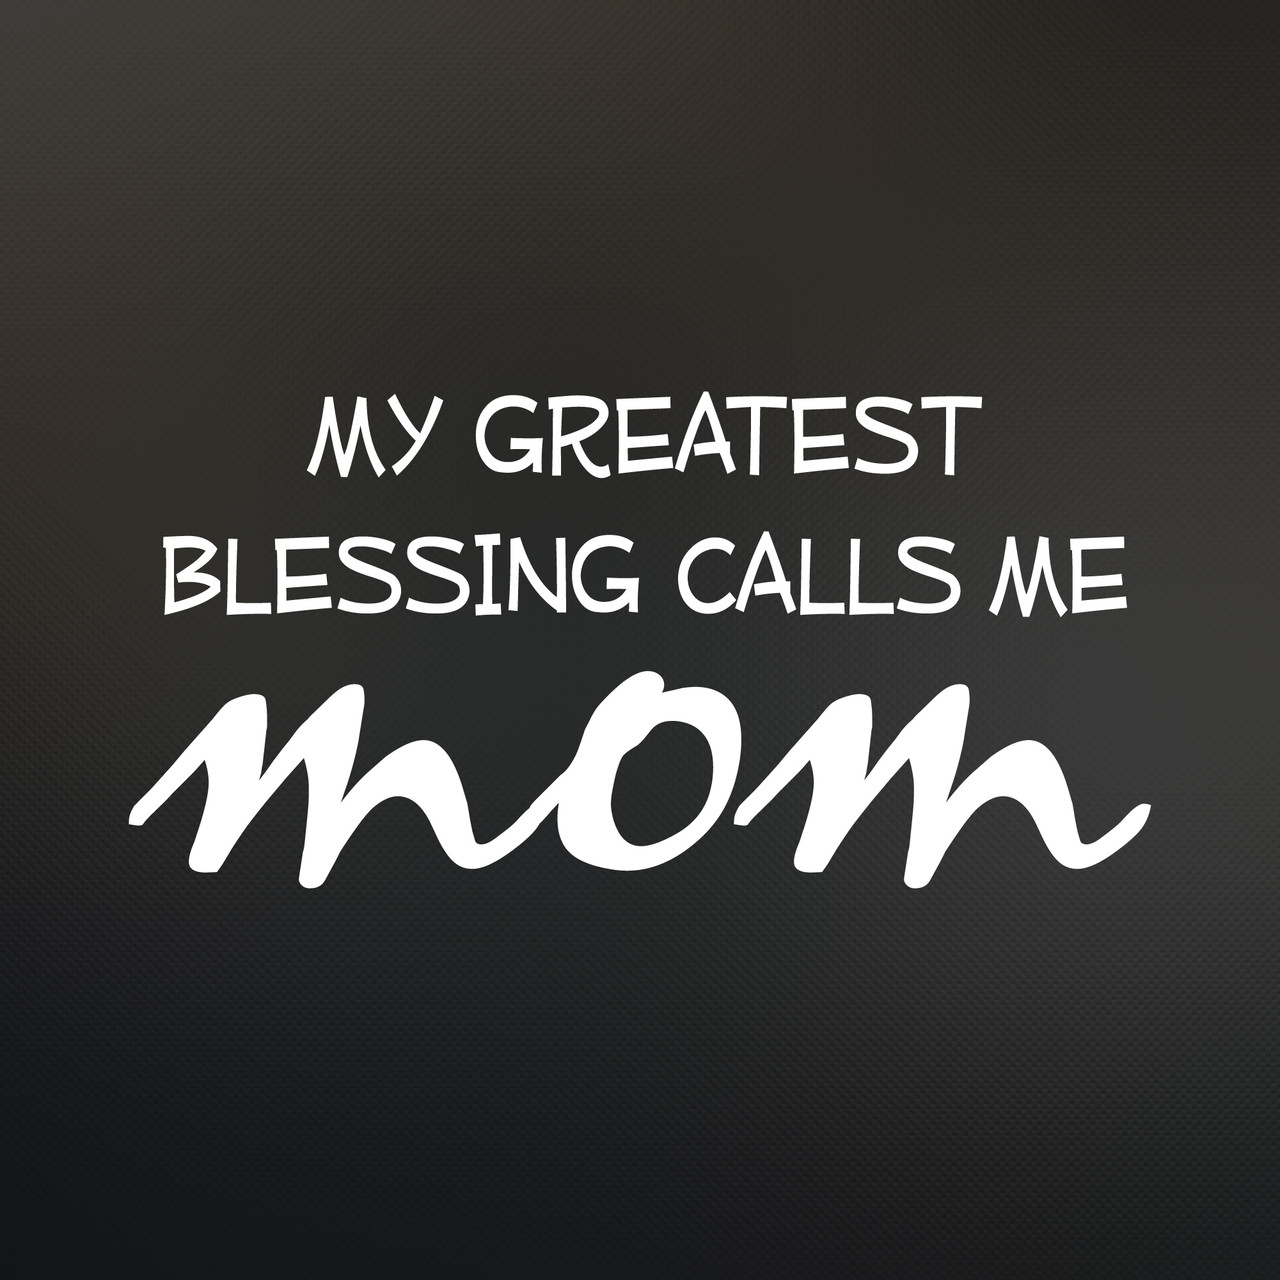 Mom's 'biggest blessing' 